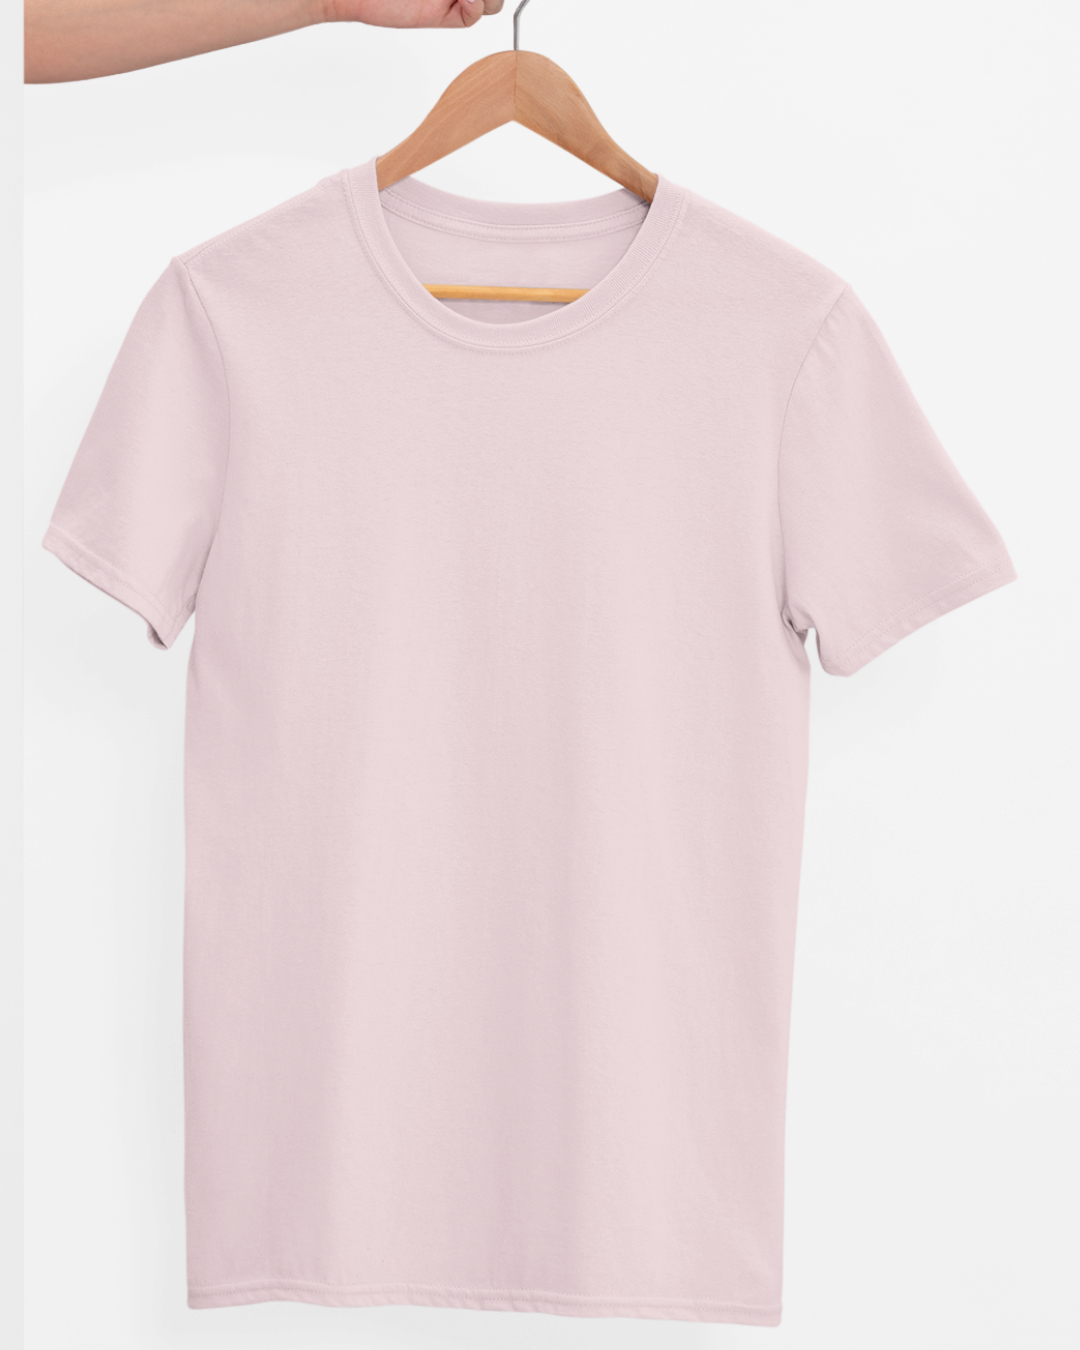 TFM Basics Plain Round Neck Half Sleeve Light Baby Pink T-Shirt ...